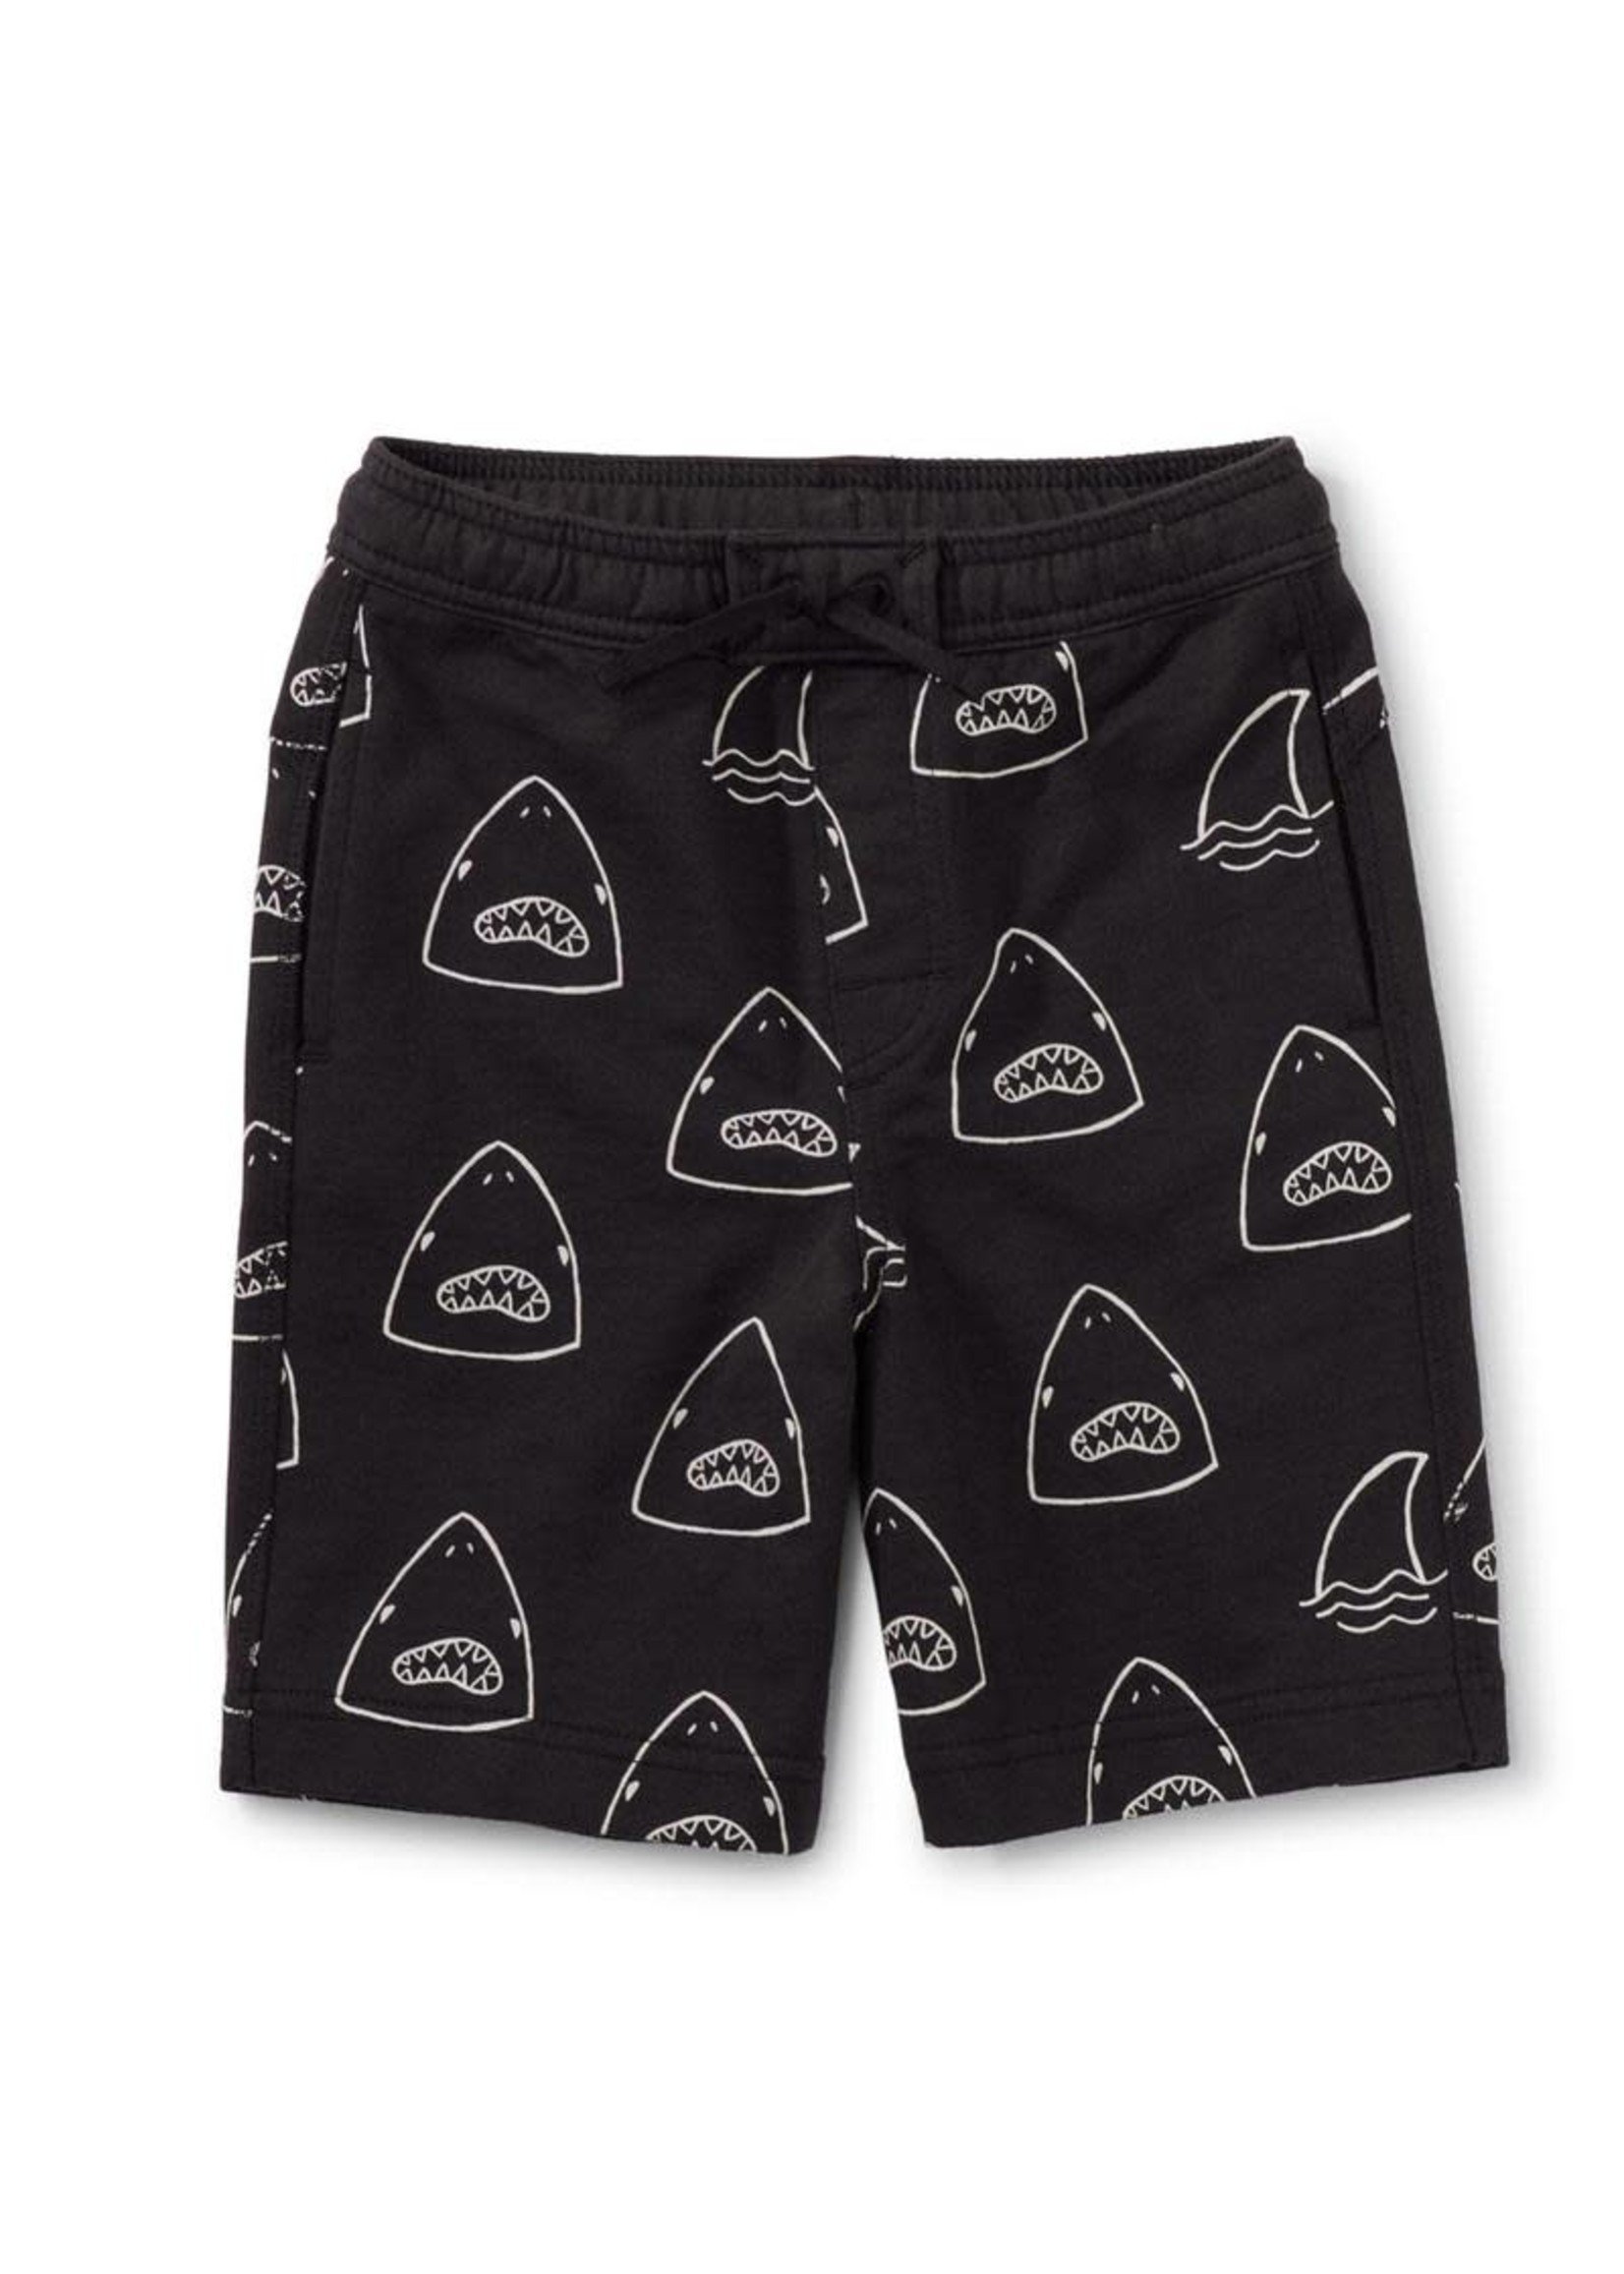 Tea Collection Shark Print Boardies Surf Shorts